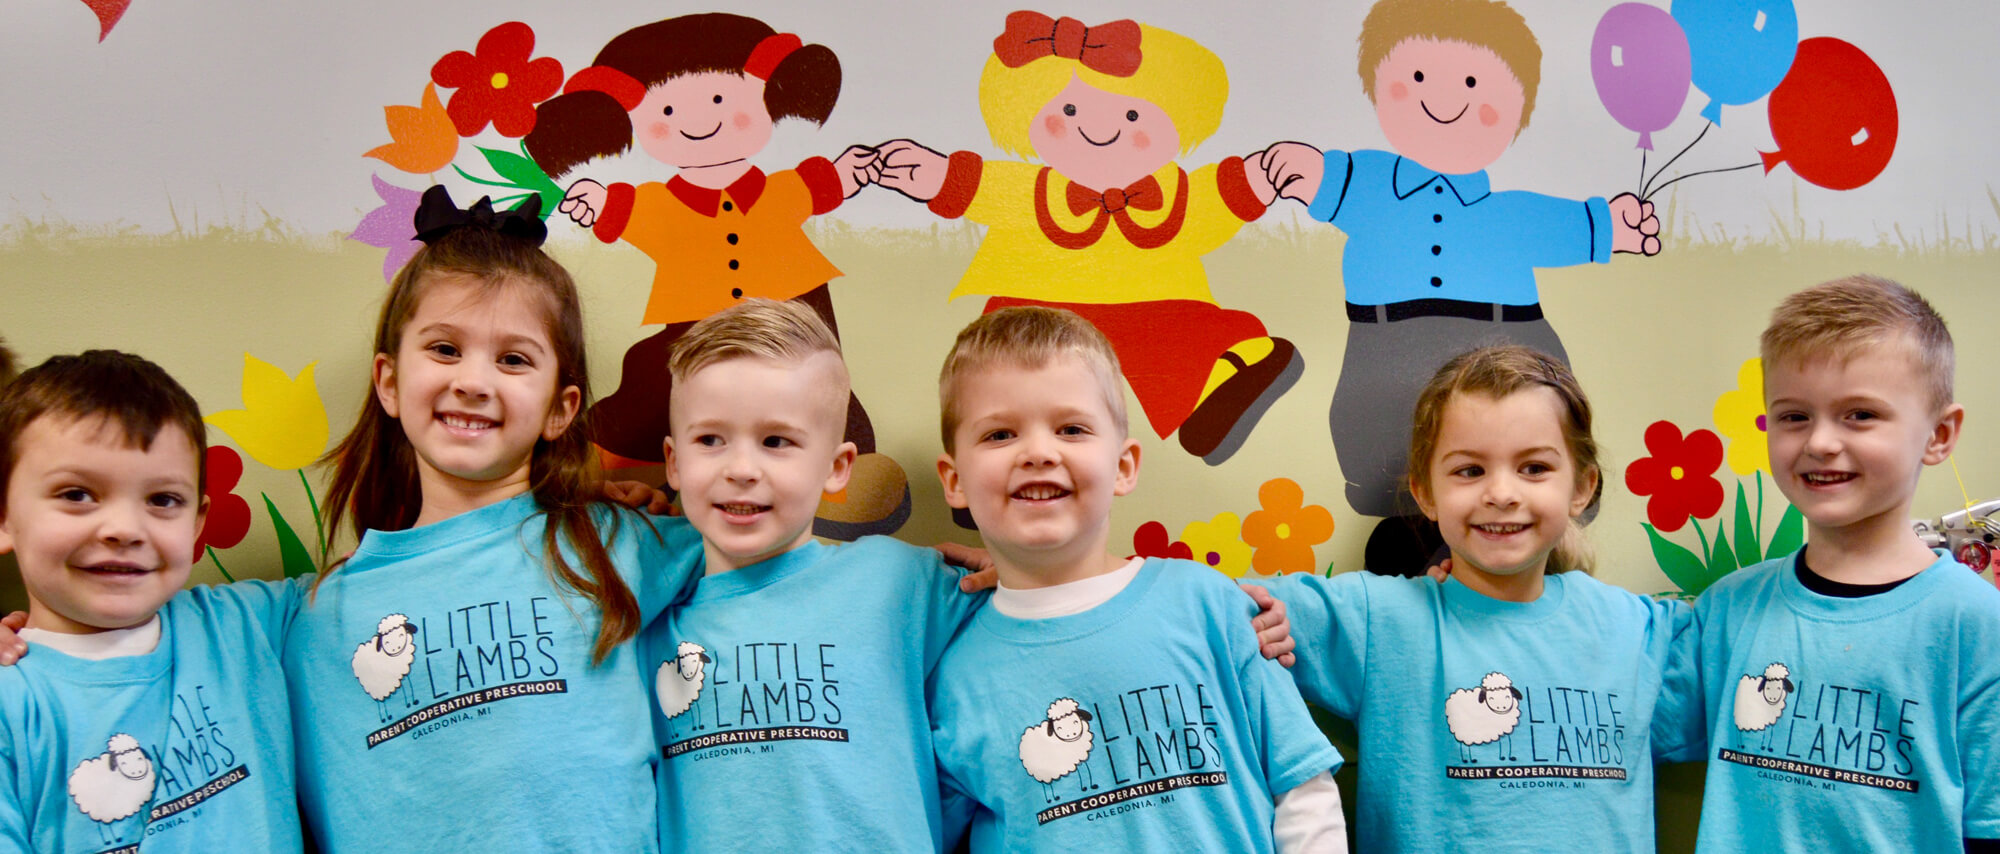 Smiling children wearing Little Lamb tee shirts